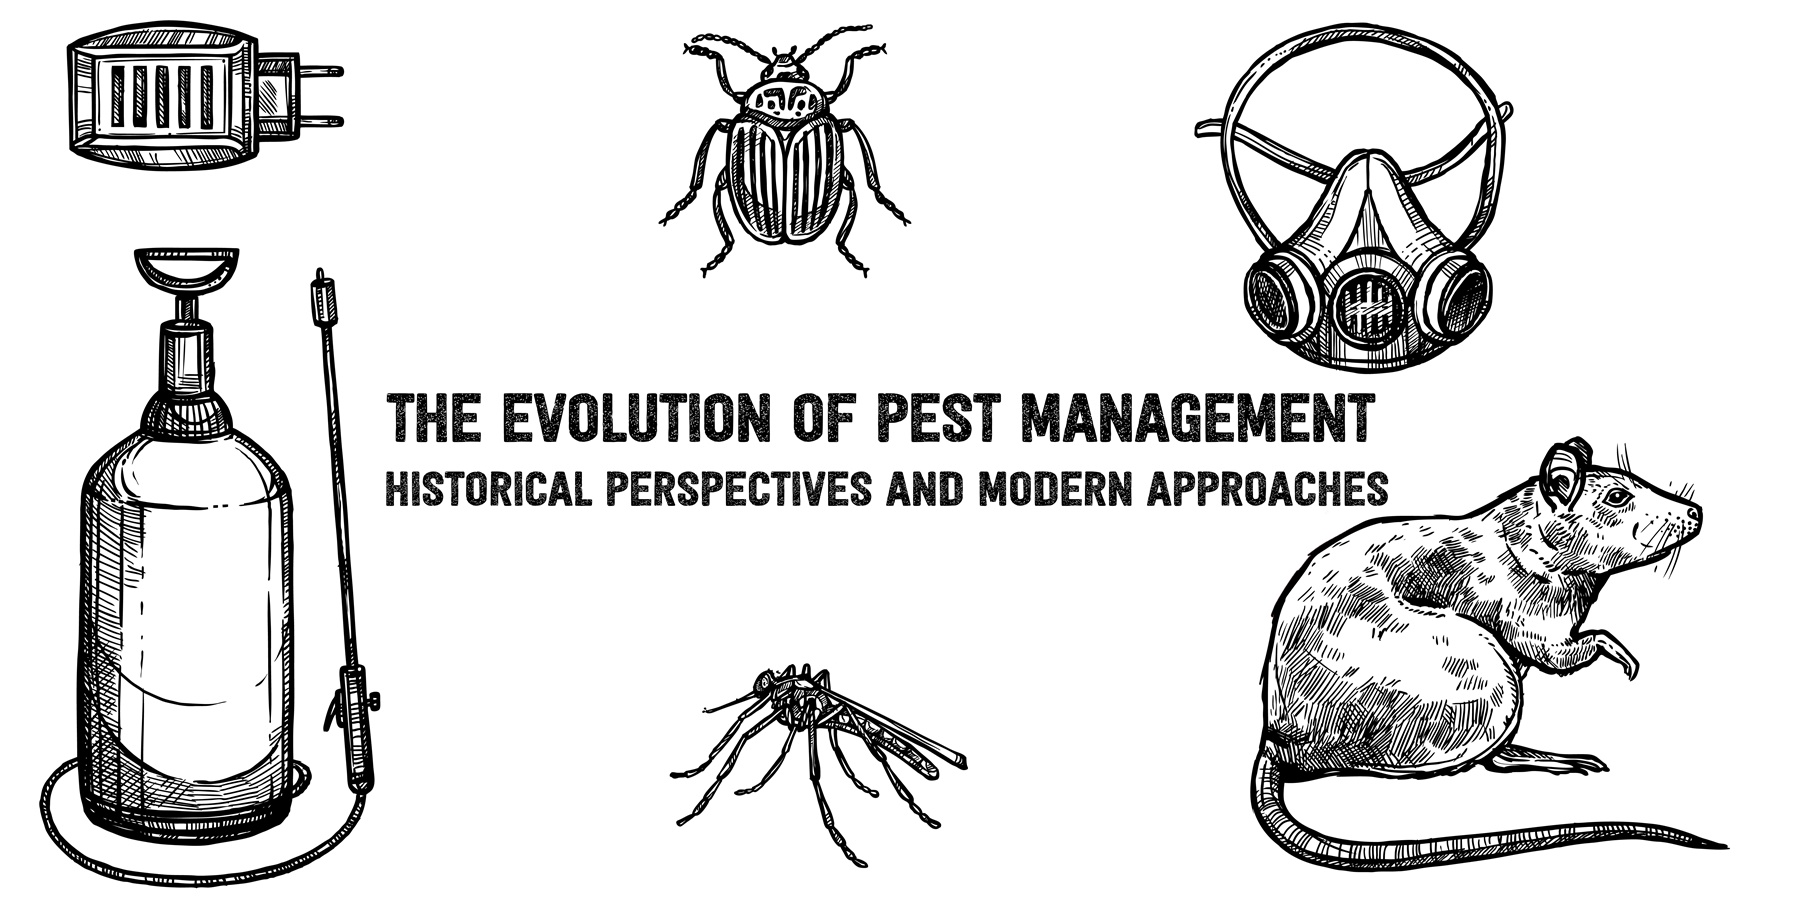 The Evolution of Pest Management